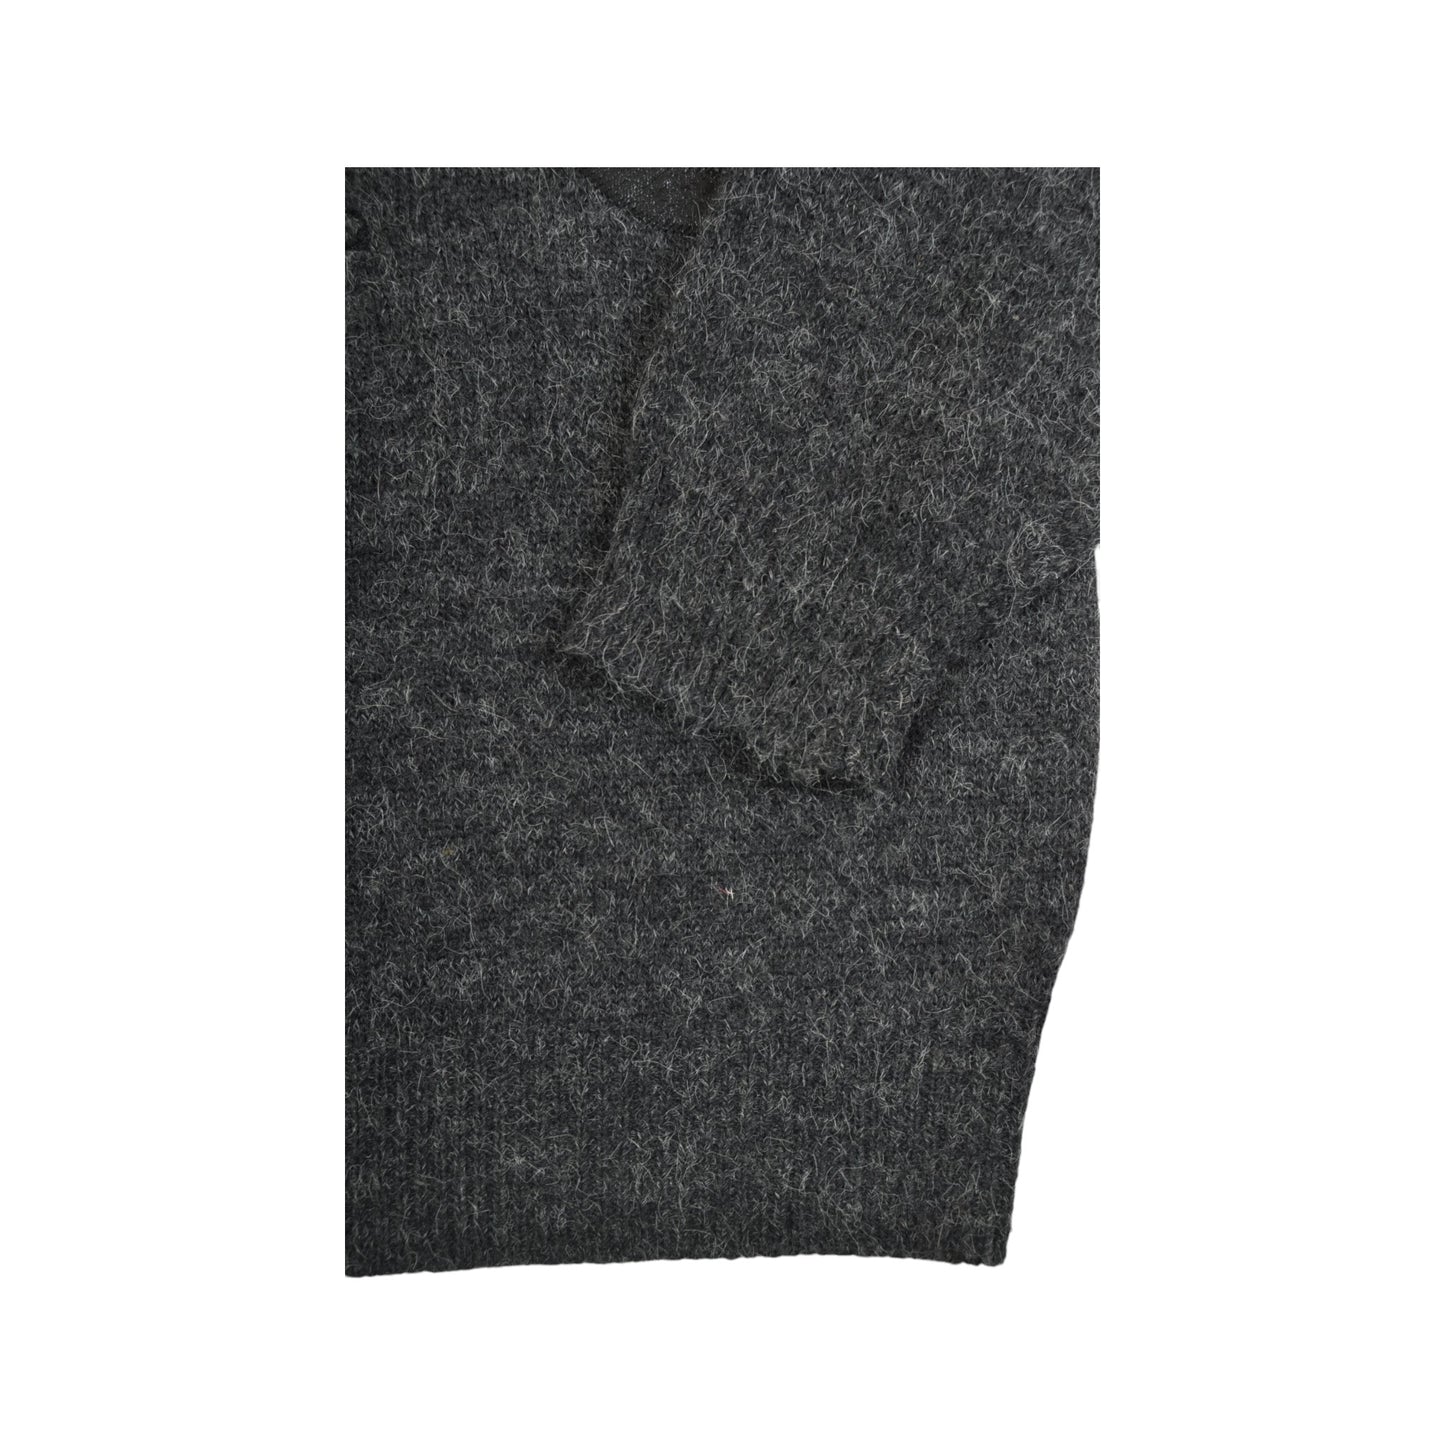 Vintage Knitwear Sweater Retro Pattern Grey Ladies Large